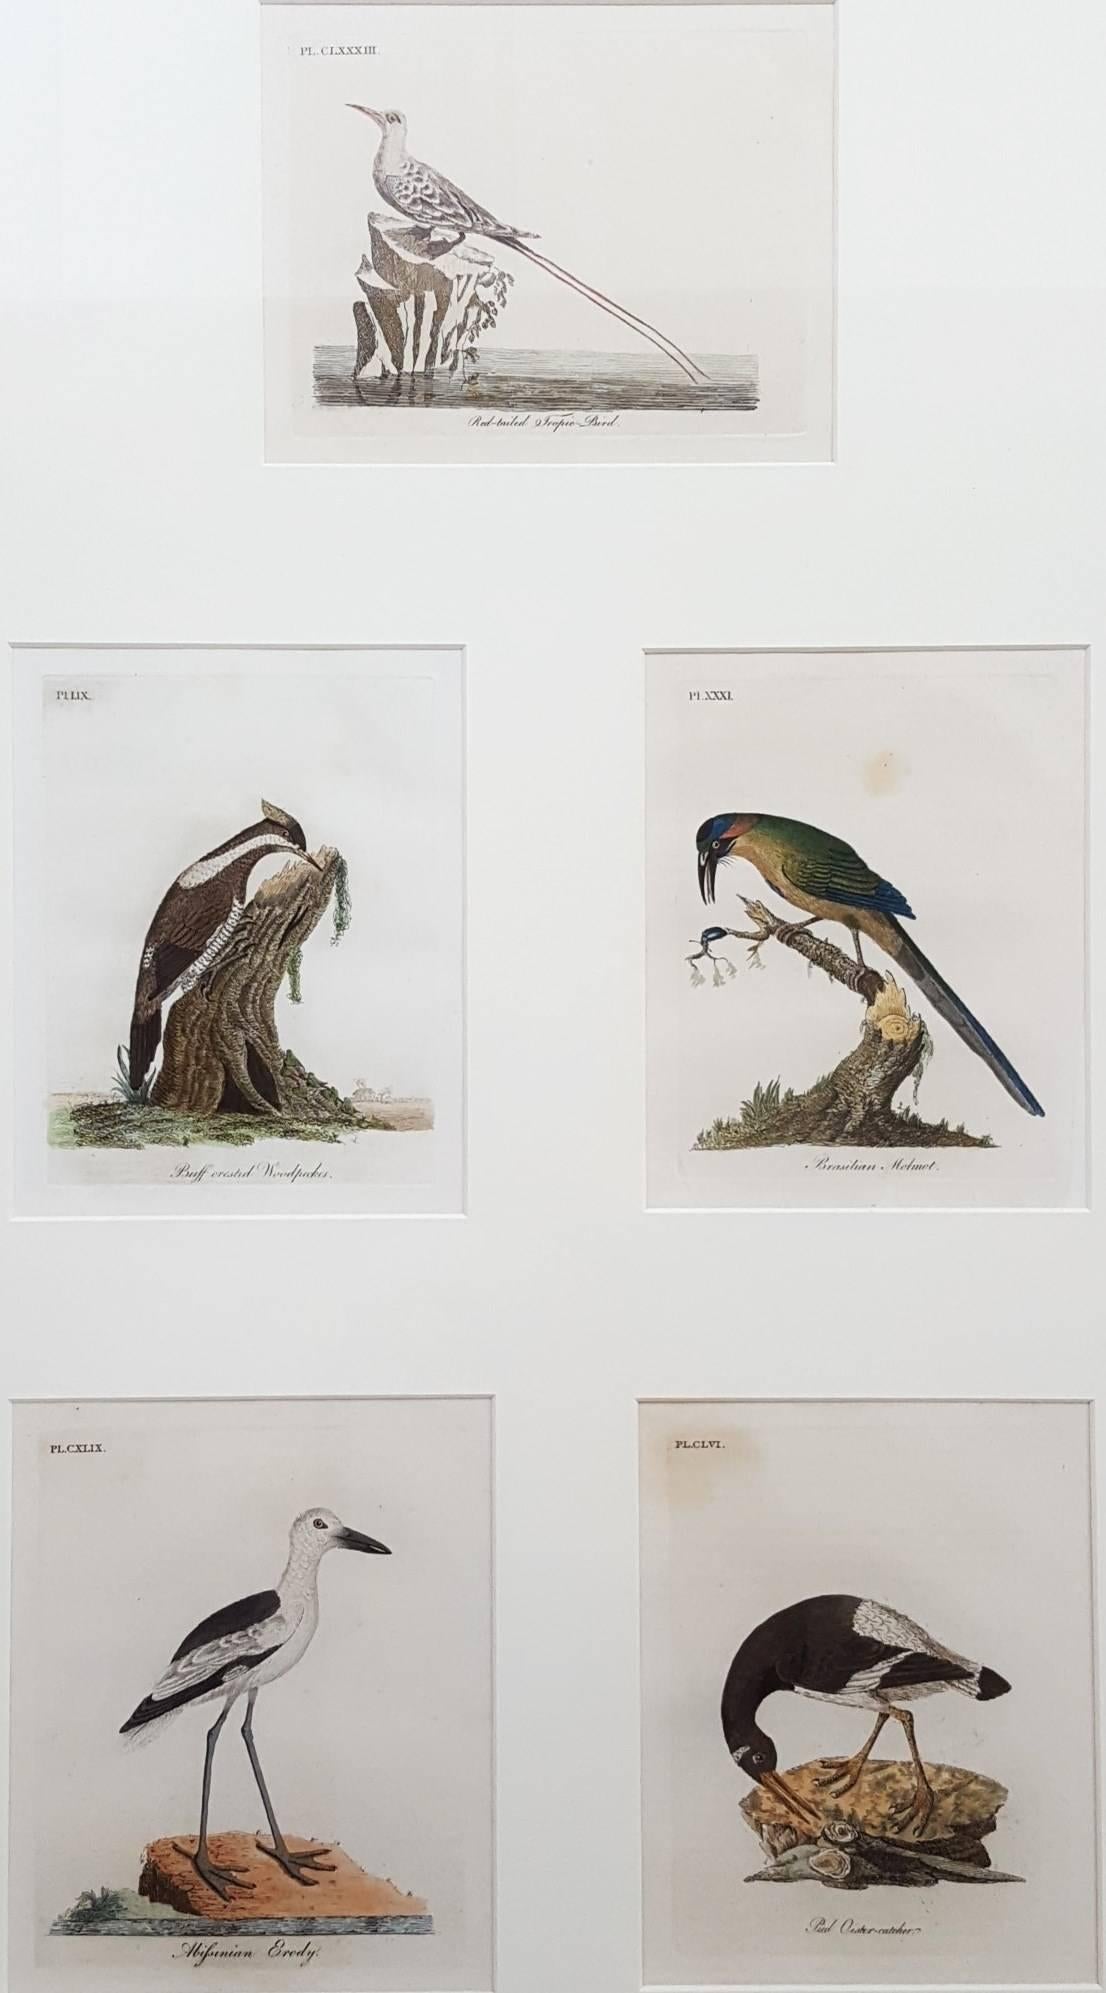 John Latham Animal Print - General History of Birds